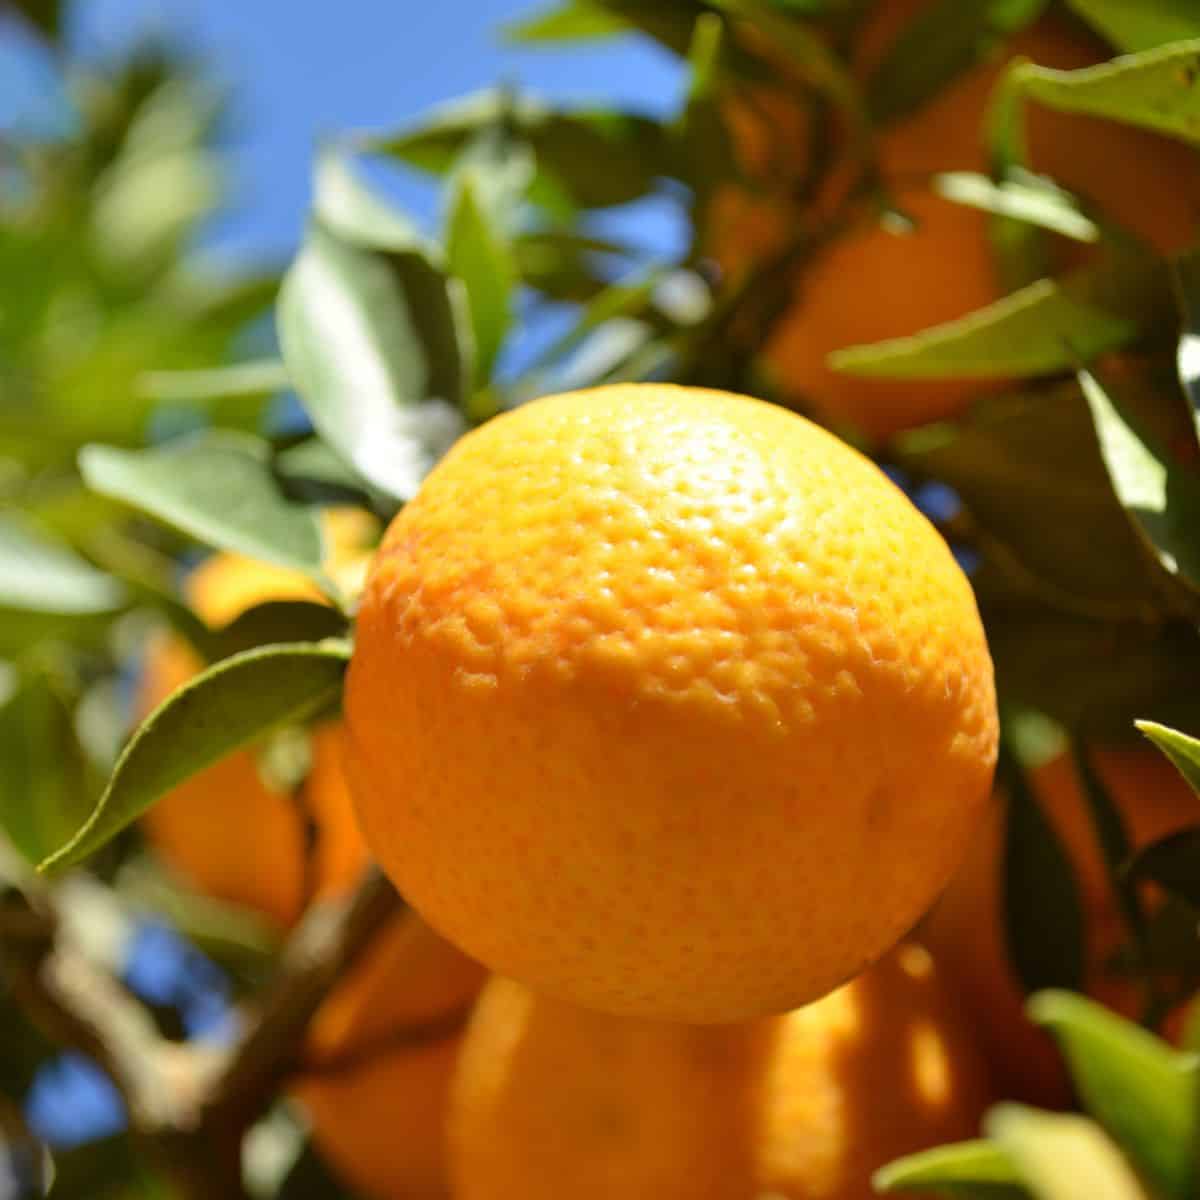 Seville oranges on tree.